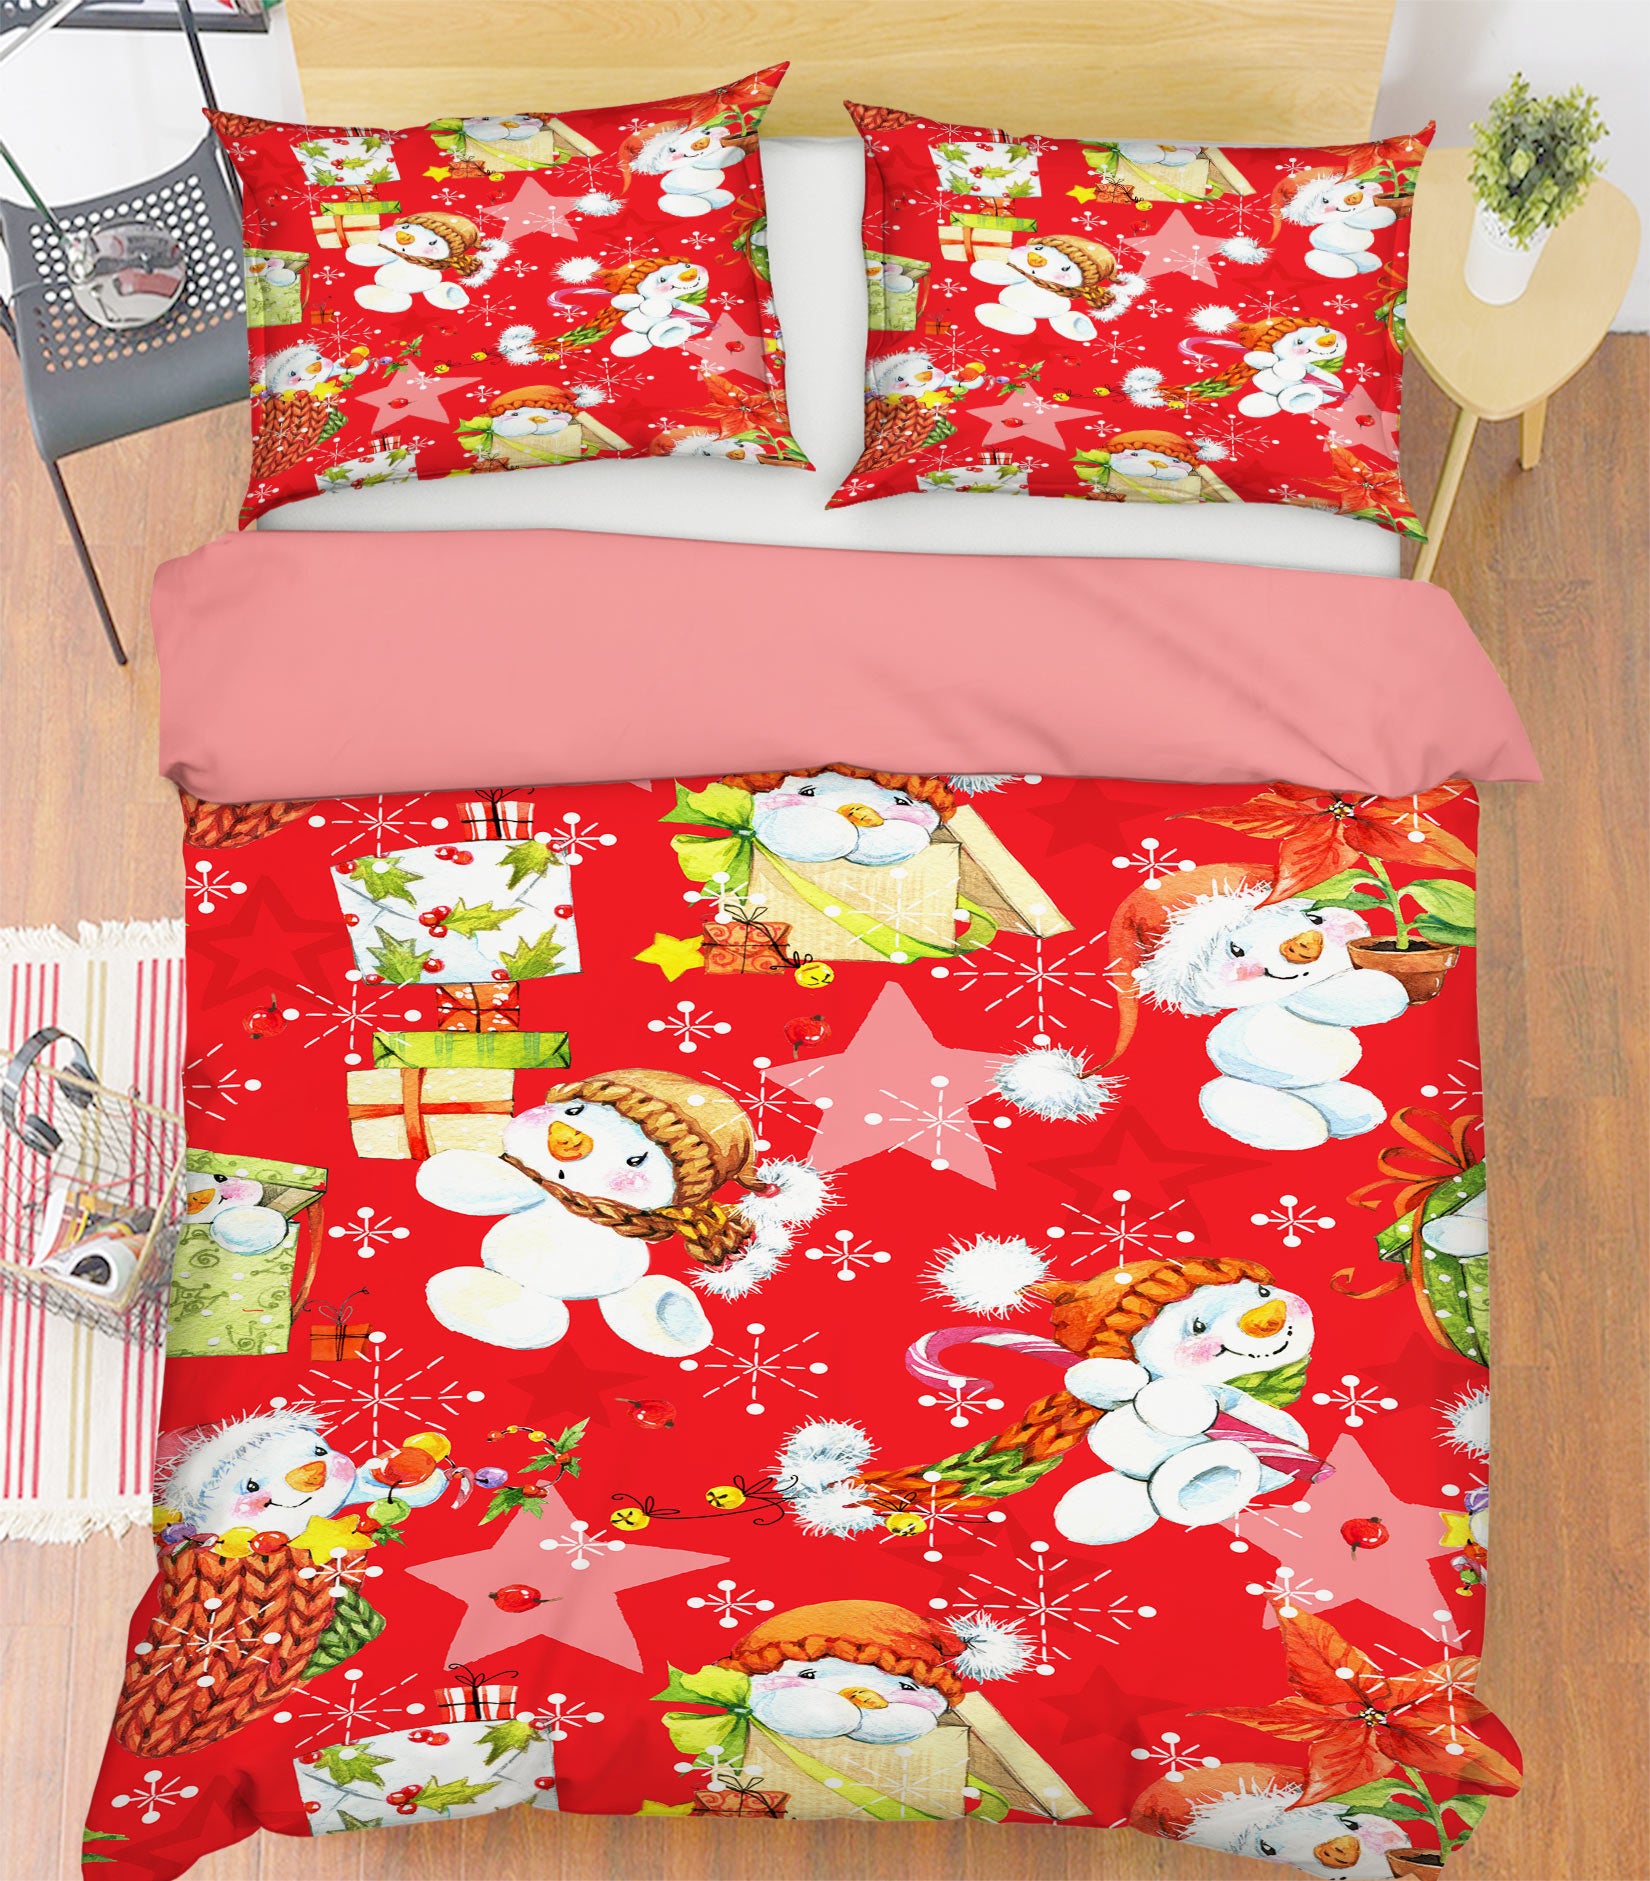 3D Snowman Doll 52132 Christmas Quilt Duvet Cover Xmas Bed Pillowcases